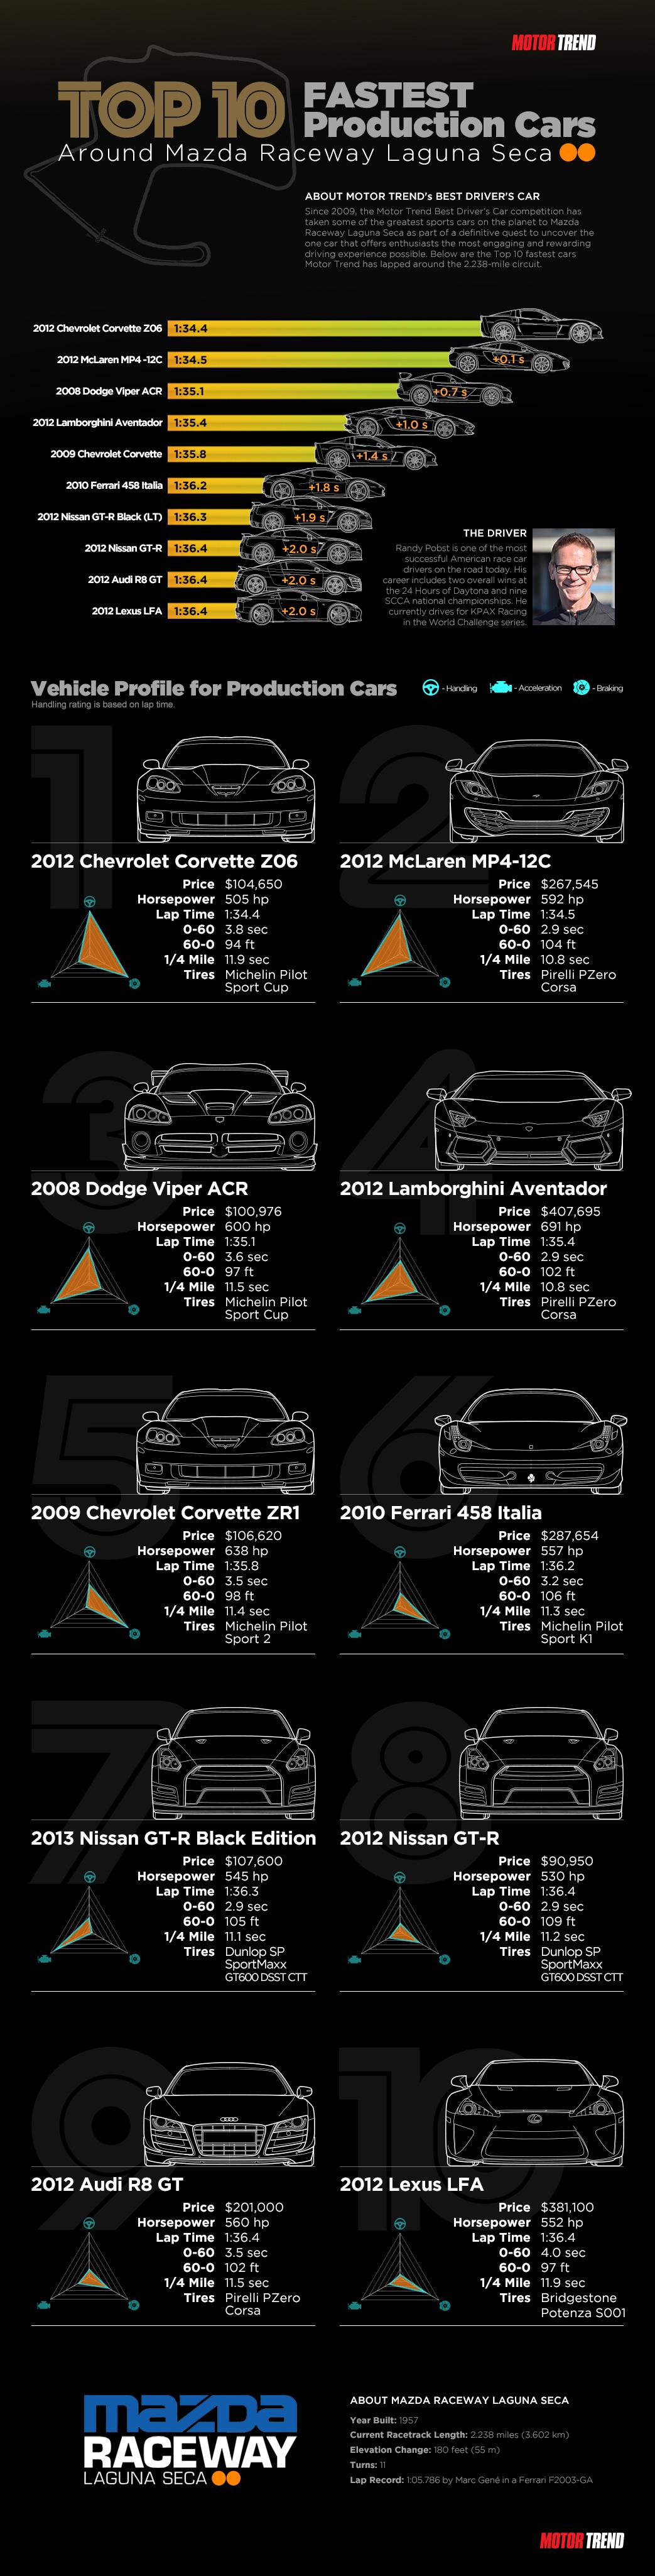 Motor Trends Top 10 Fastest Lap Times on Mazda Raceway Laguna Seca Infographic